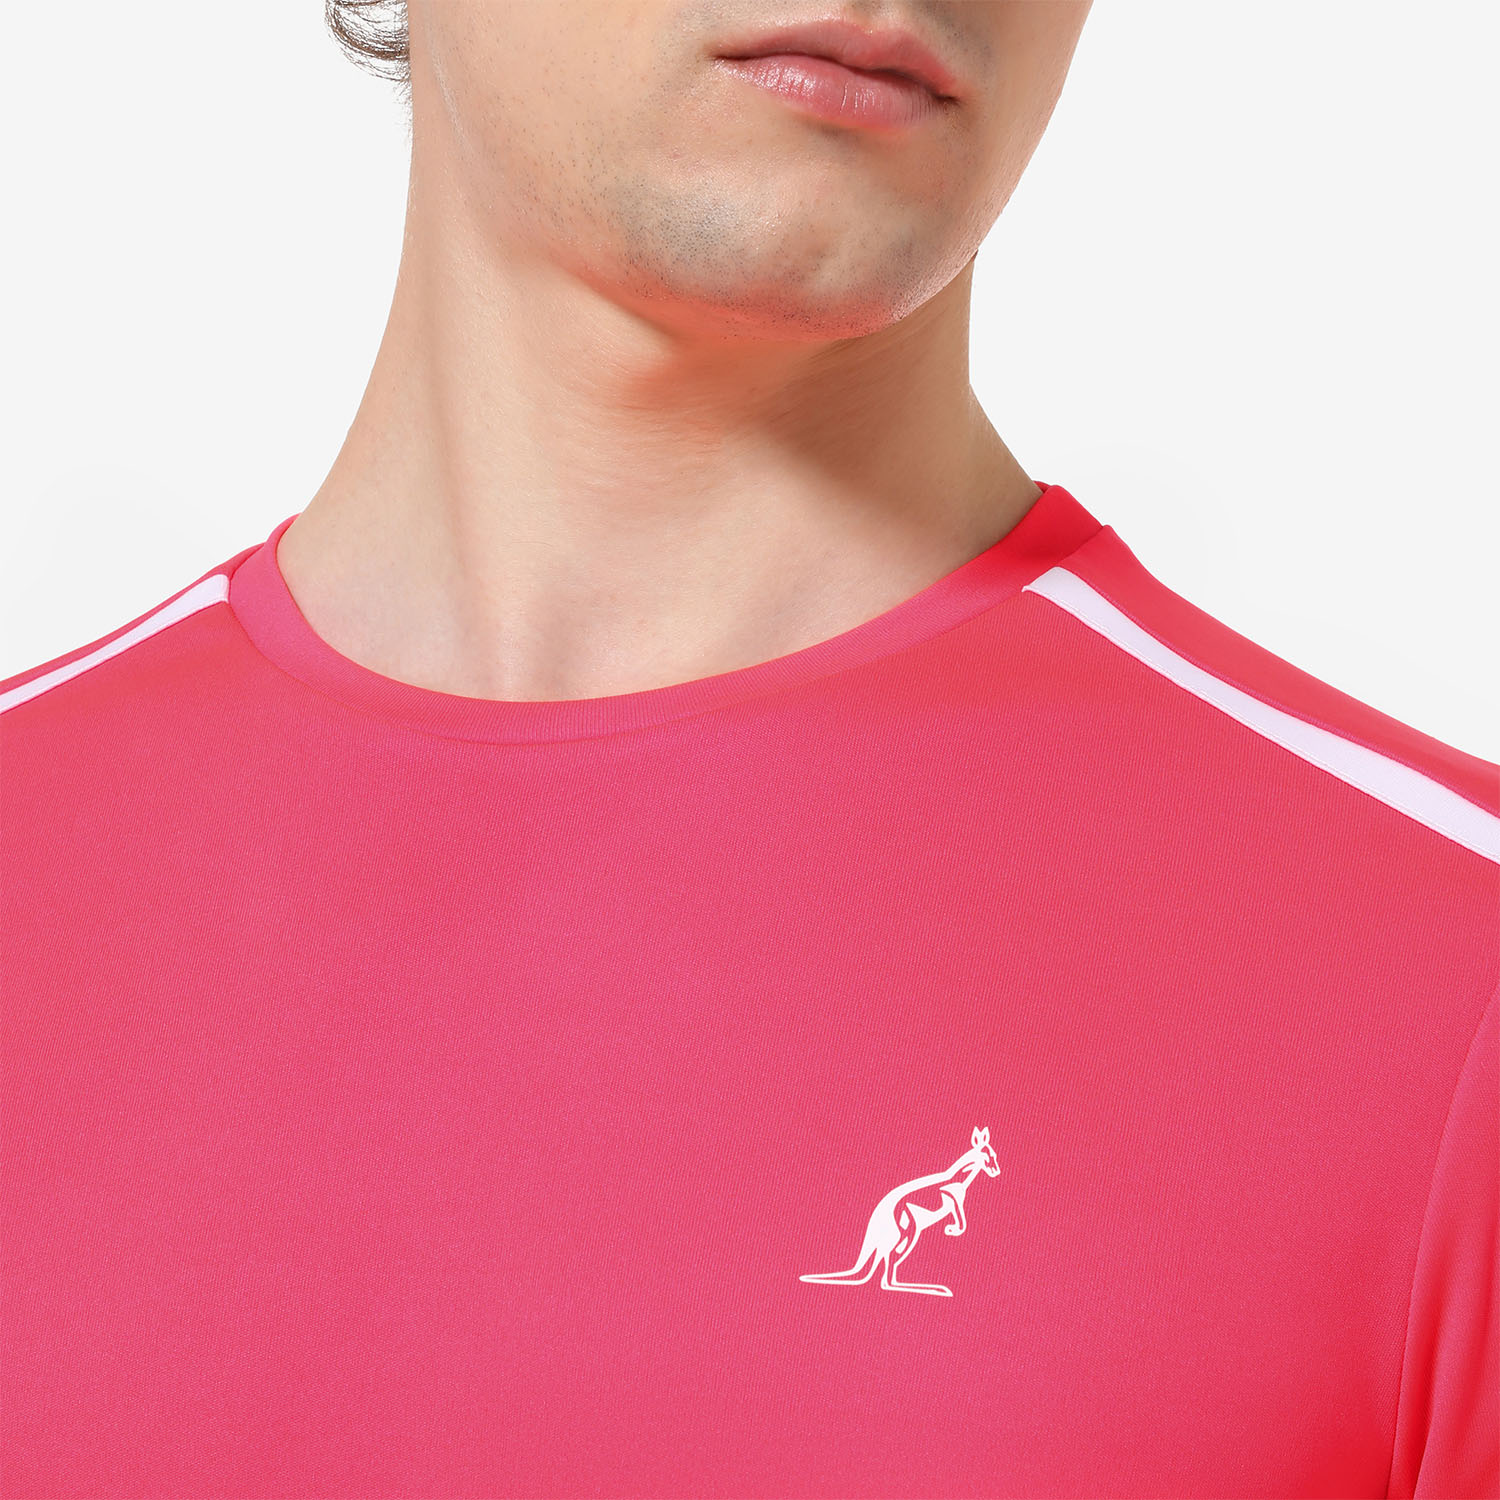 Australian Ace T-Shirt - Psyco Red